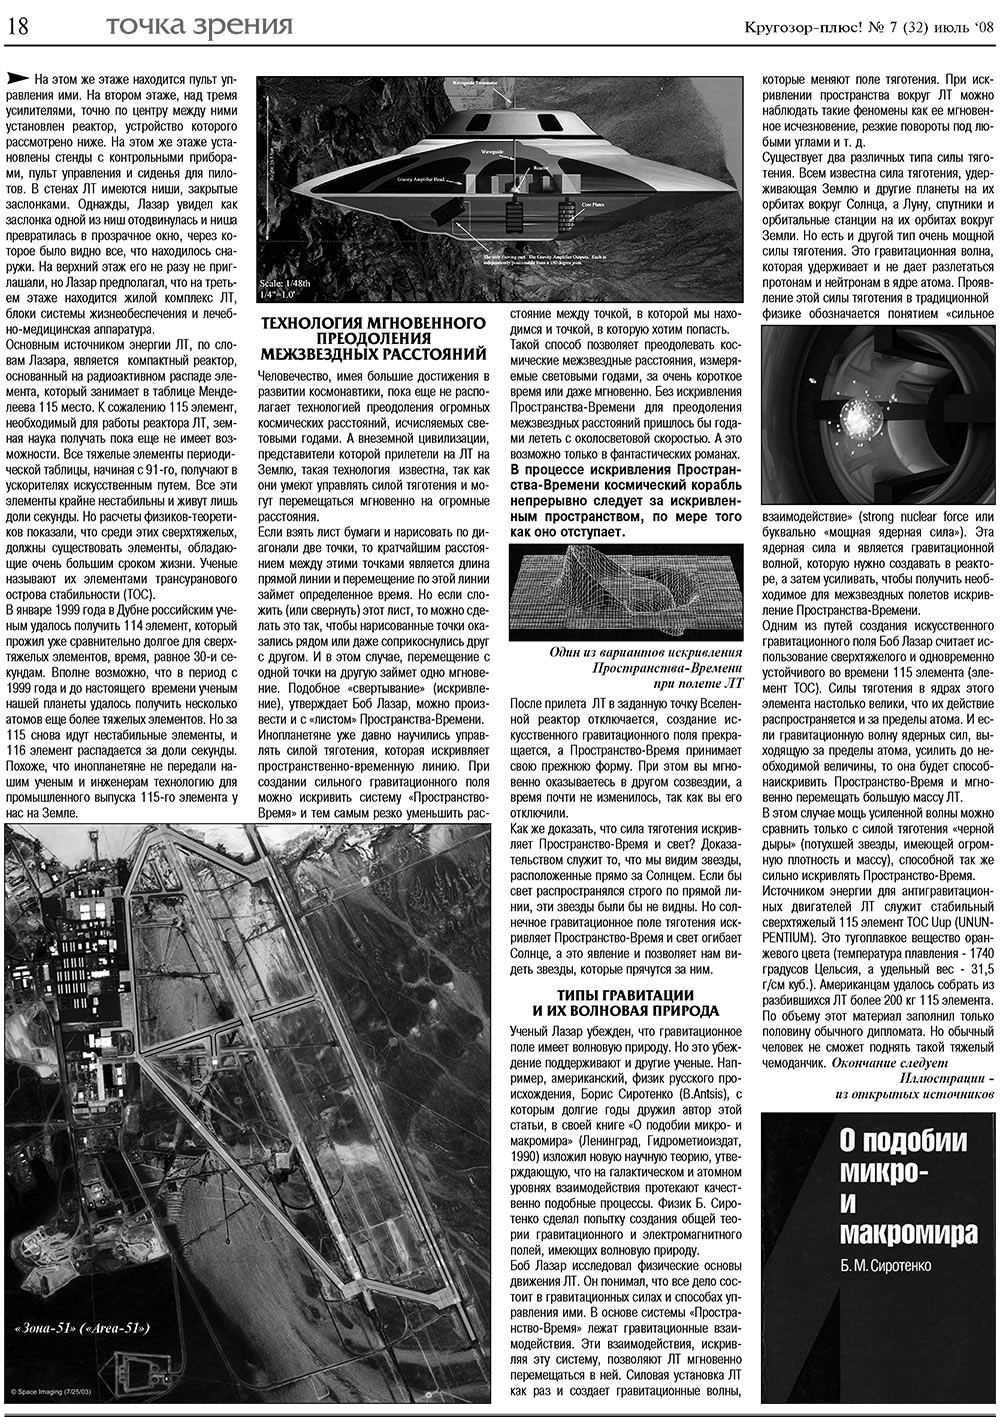 Кругозор плюс! (газета). 2008 год, номер 7, стр. 18